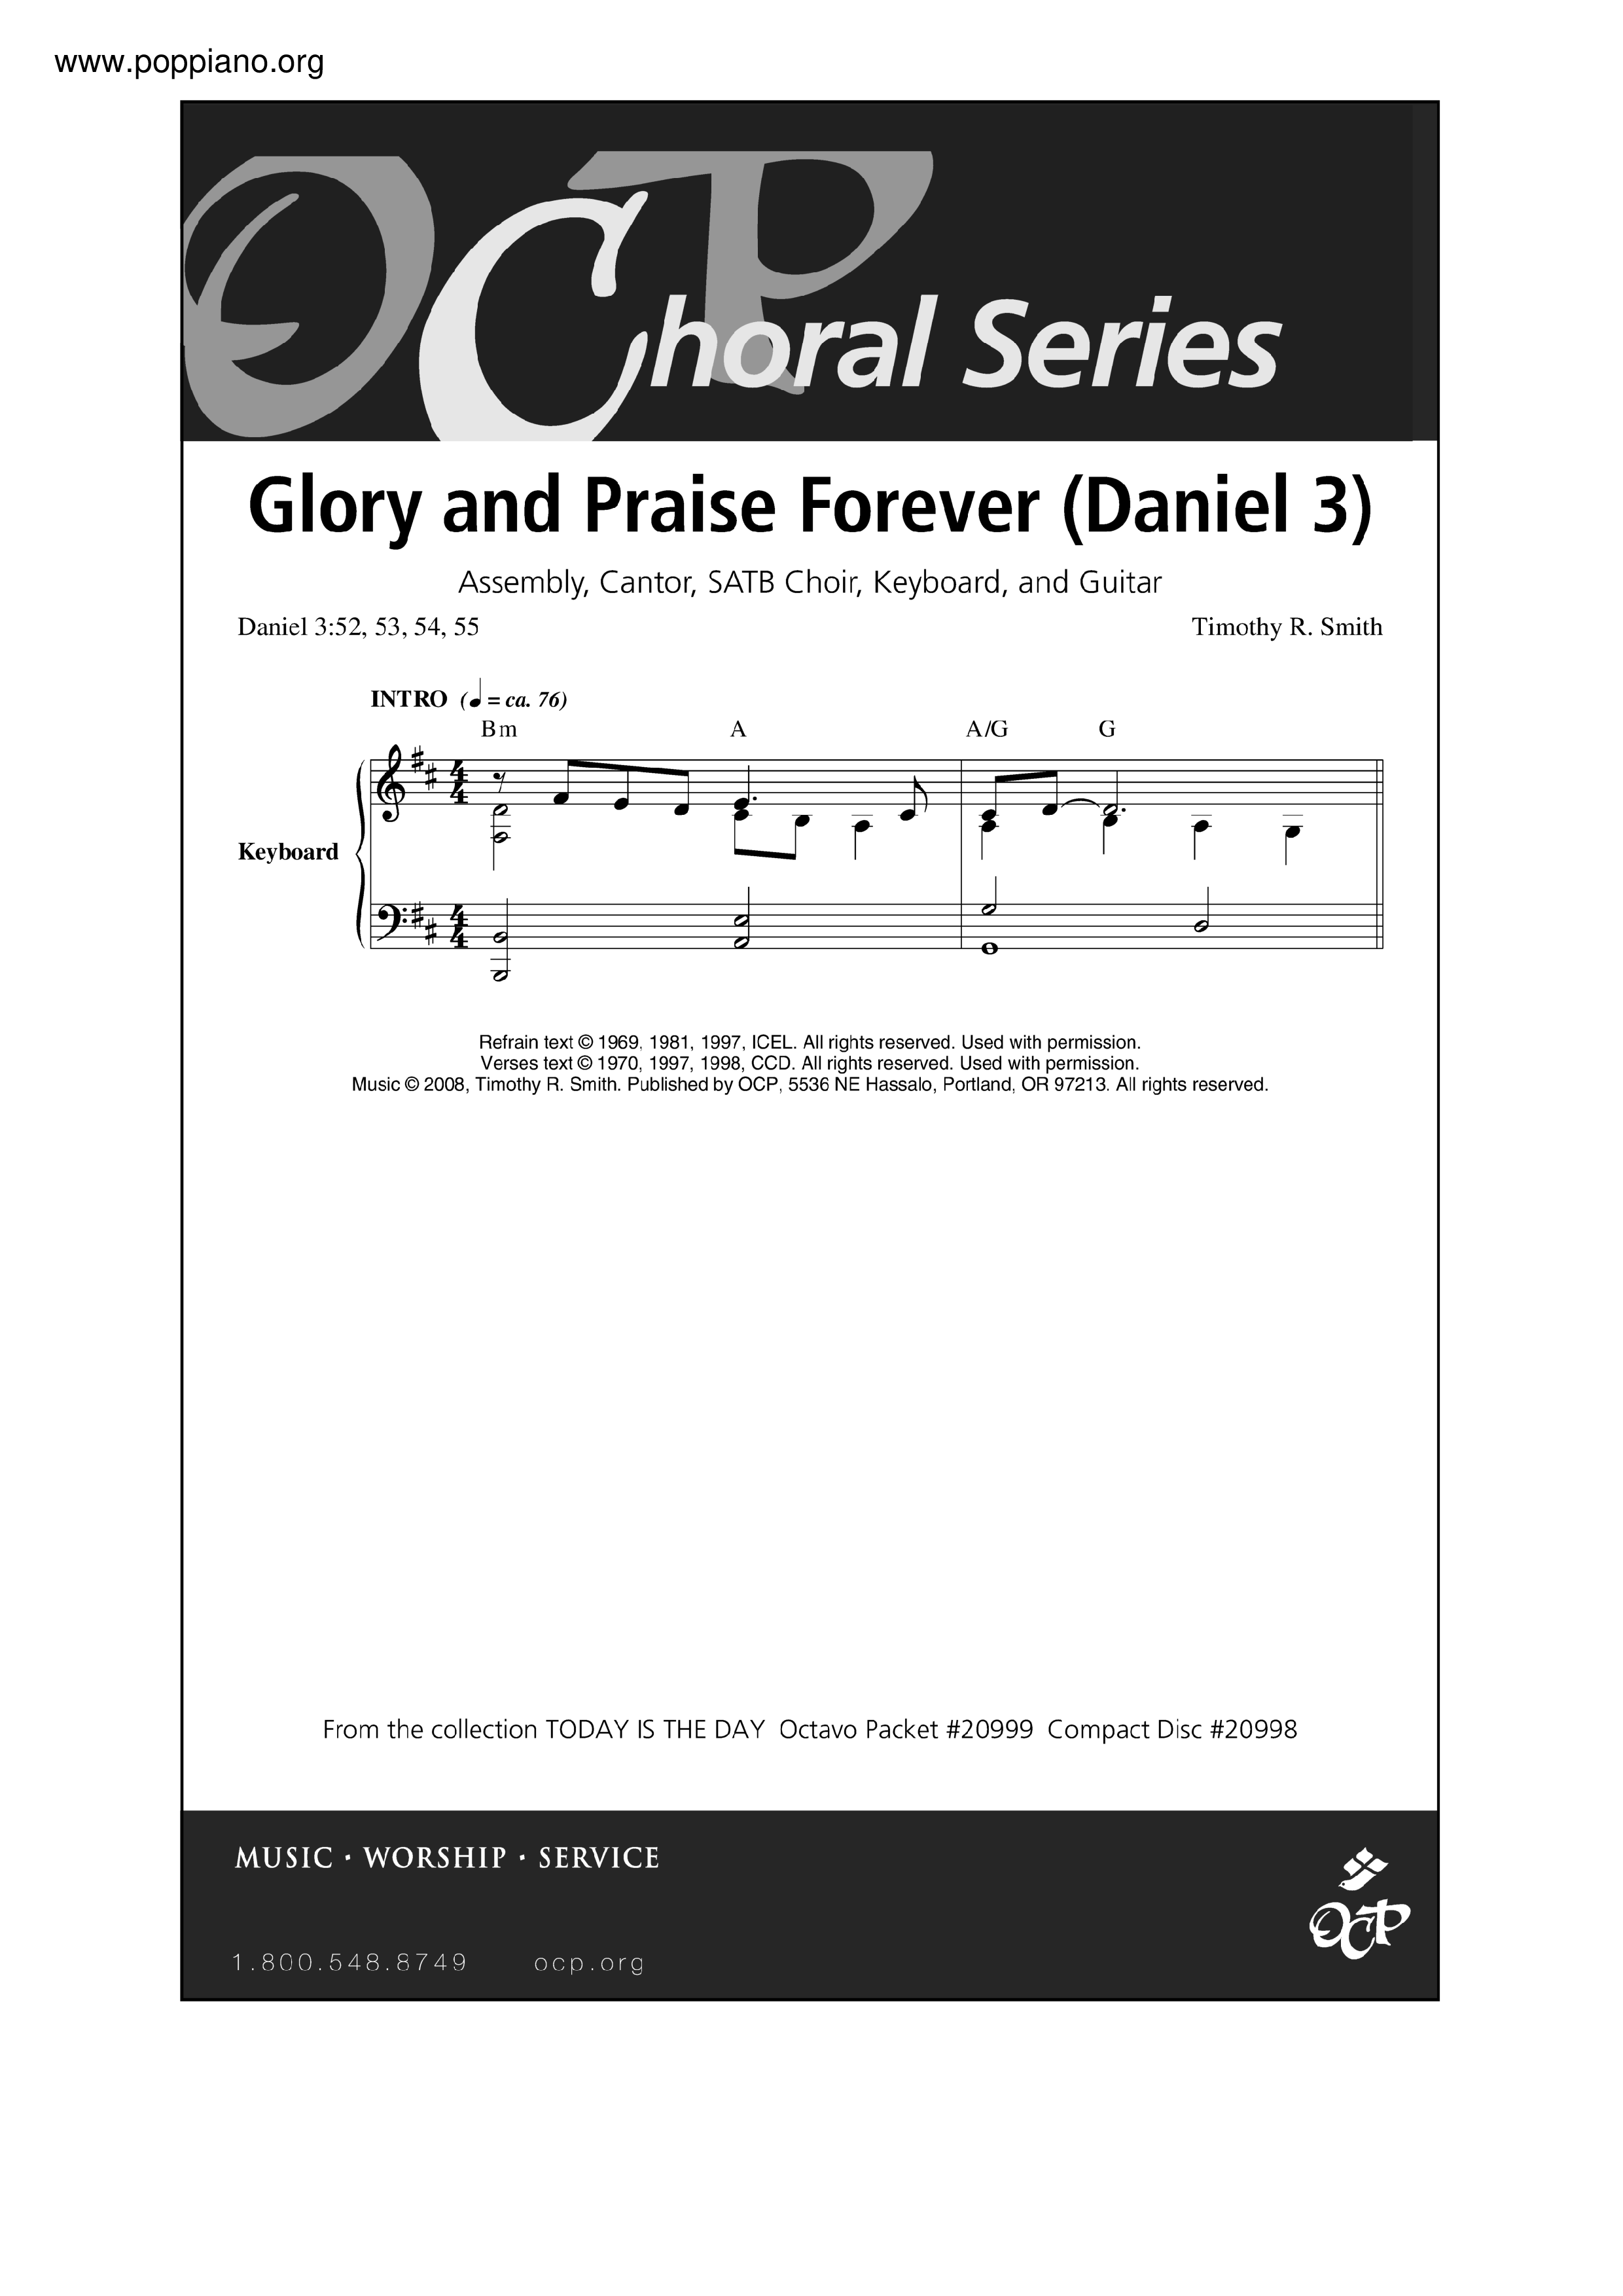 Glory And Praise Forever (Daniel 3) Score